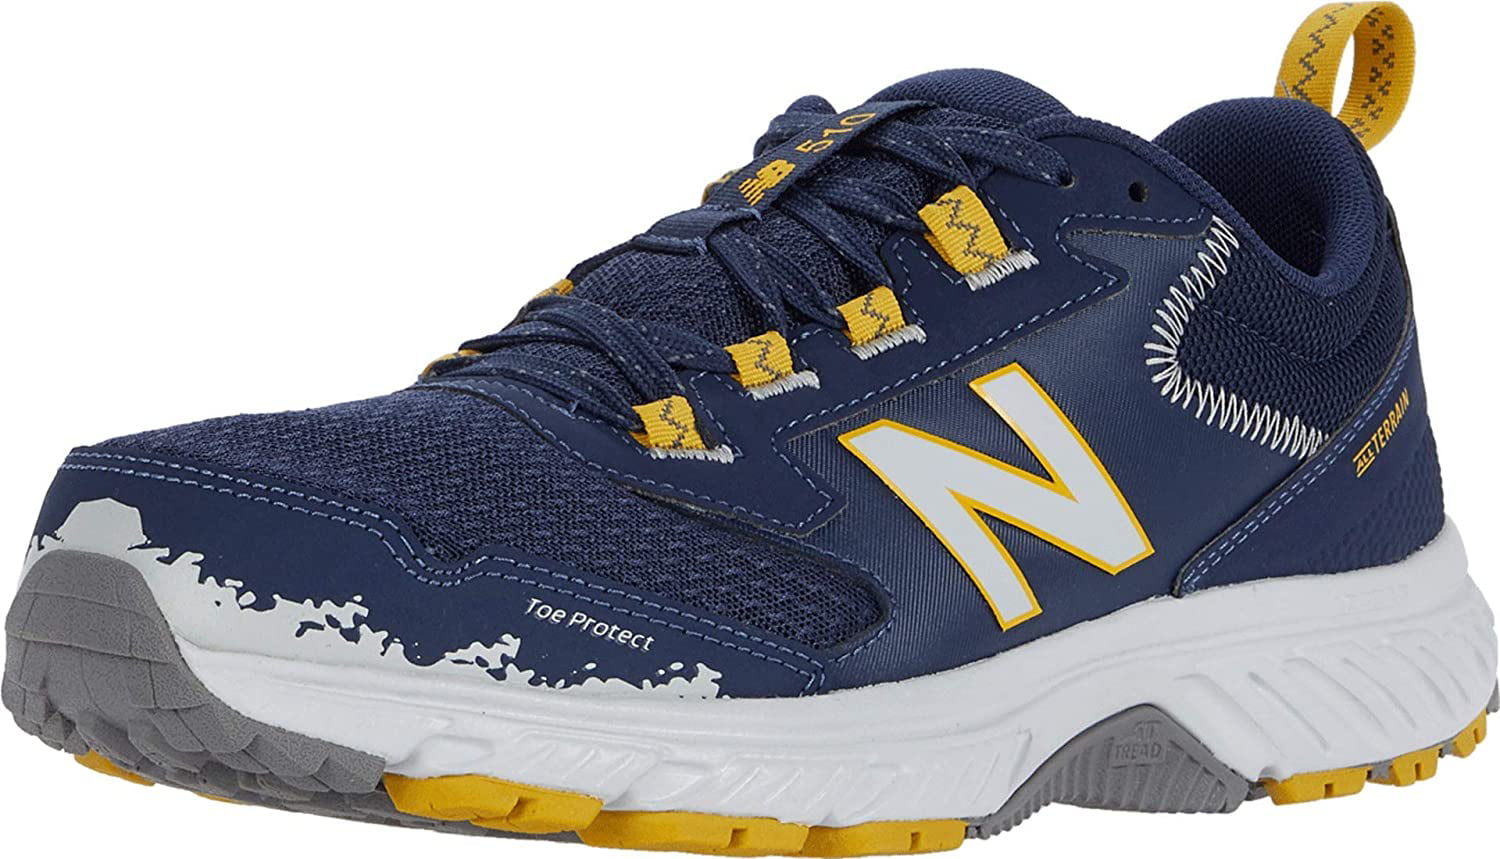 New Balance Men's 510 V5 Trail Running Shoe, Natural Indigo/Chromatic Yellow, 11 M US